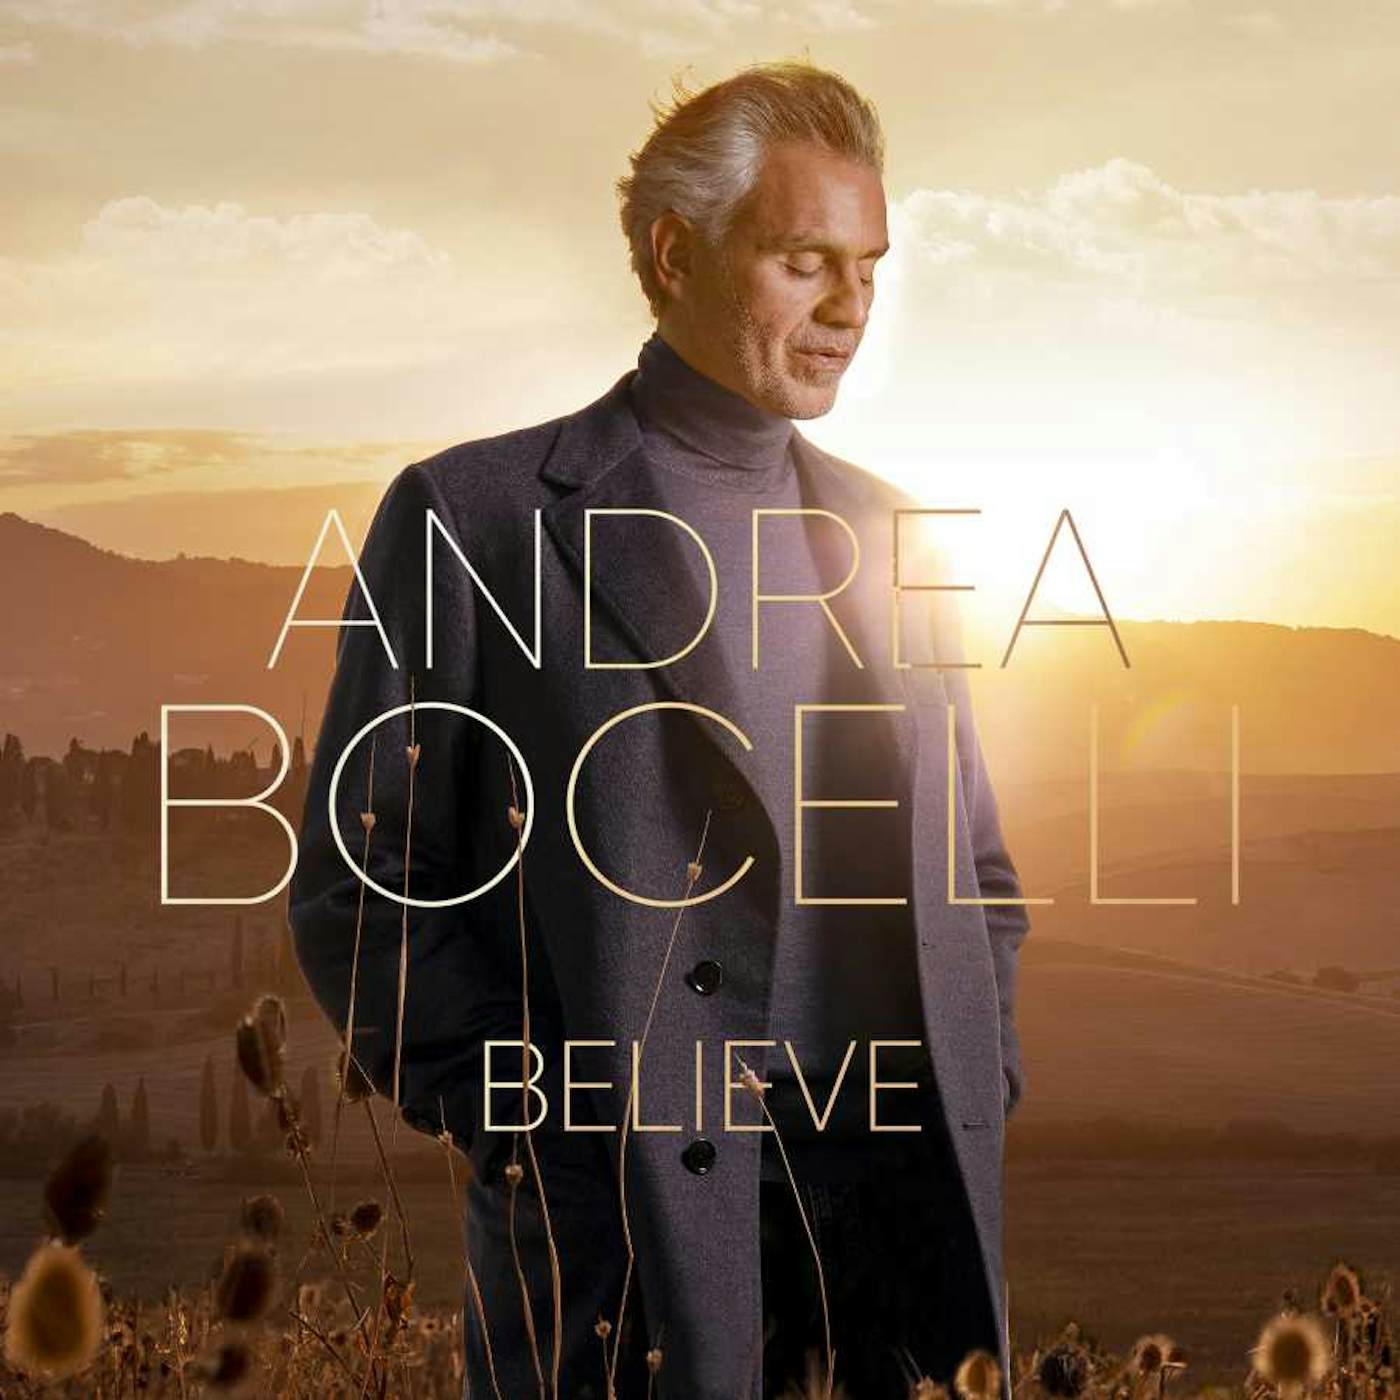 Andrea Bocelli BELIEVE (DELUXE) CD